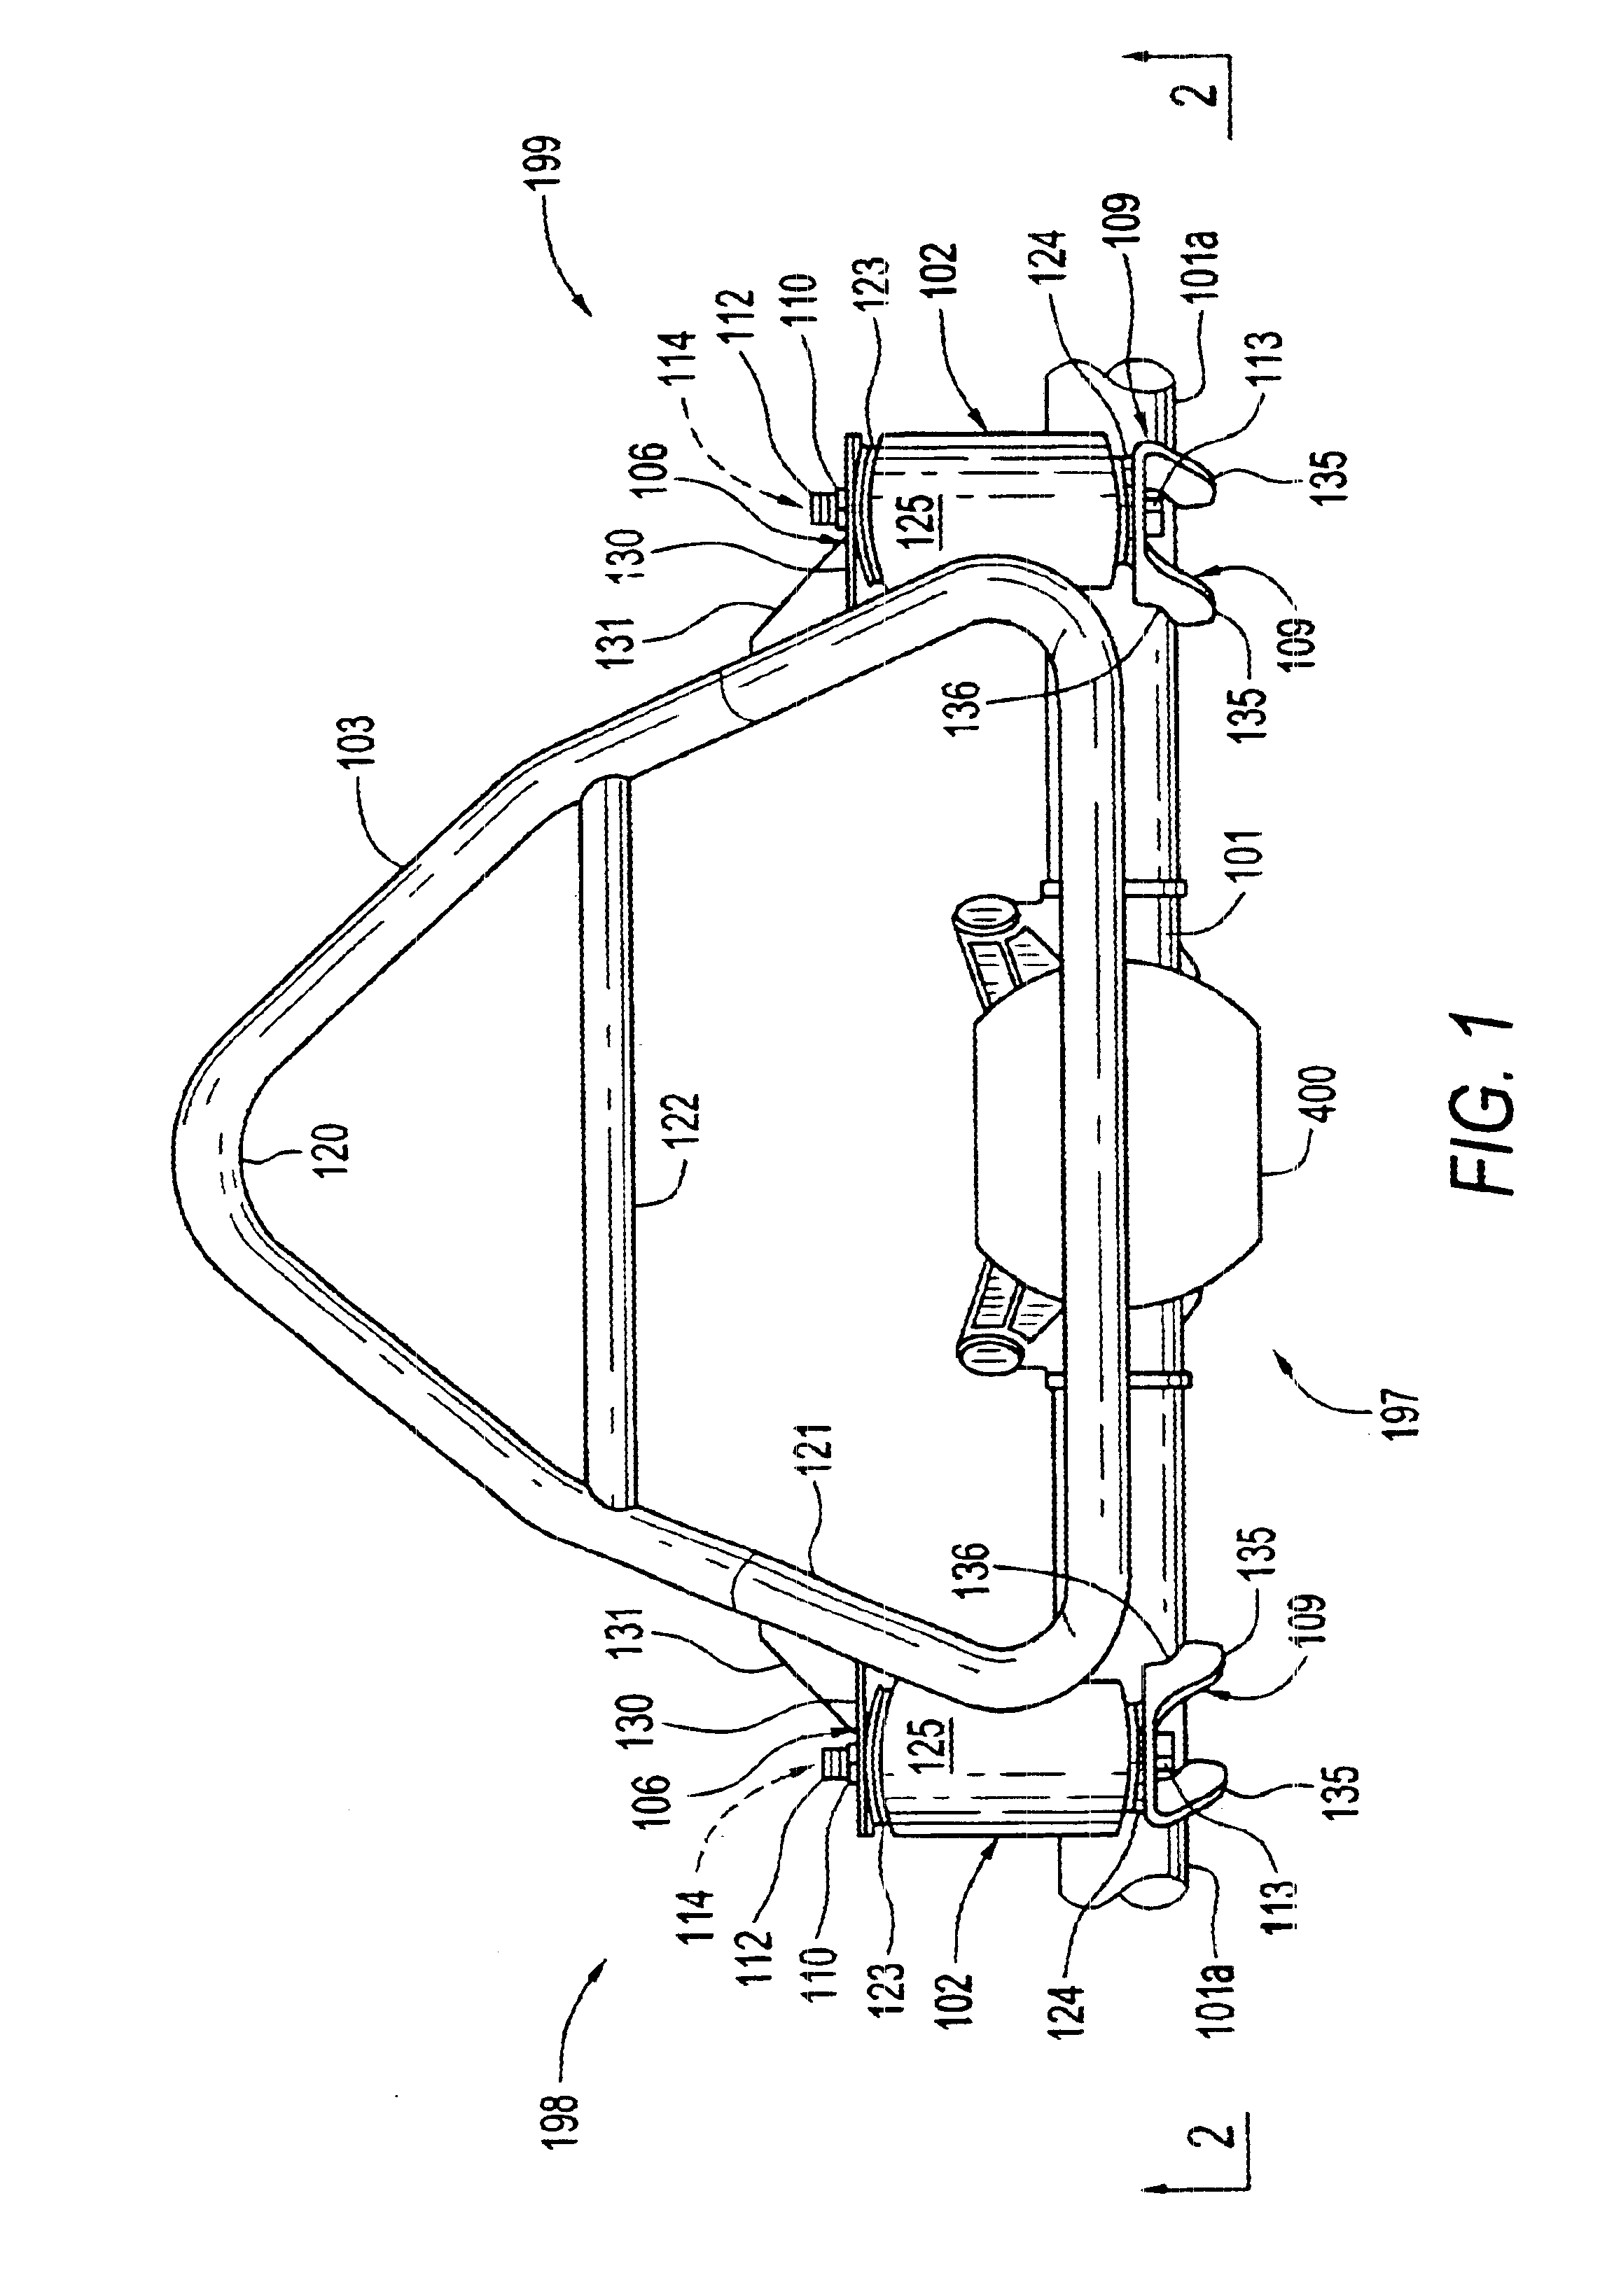 Air bladder suspension for three-wheeled vehicle